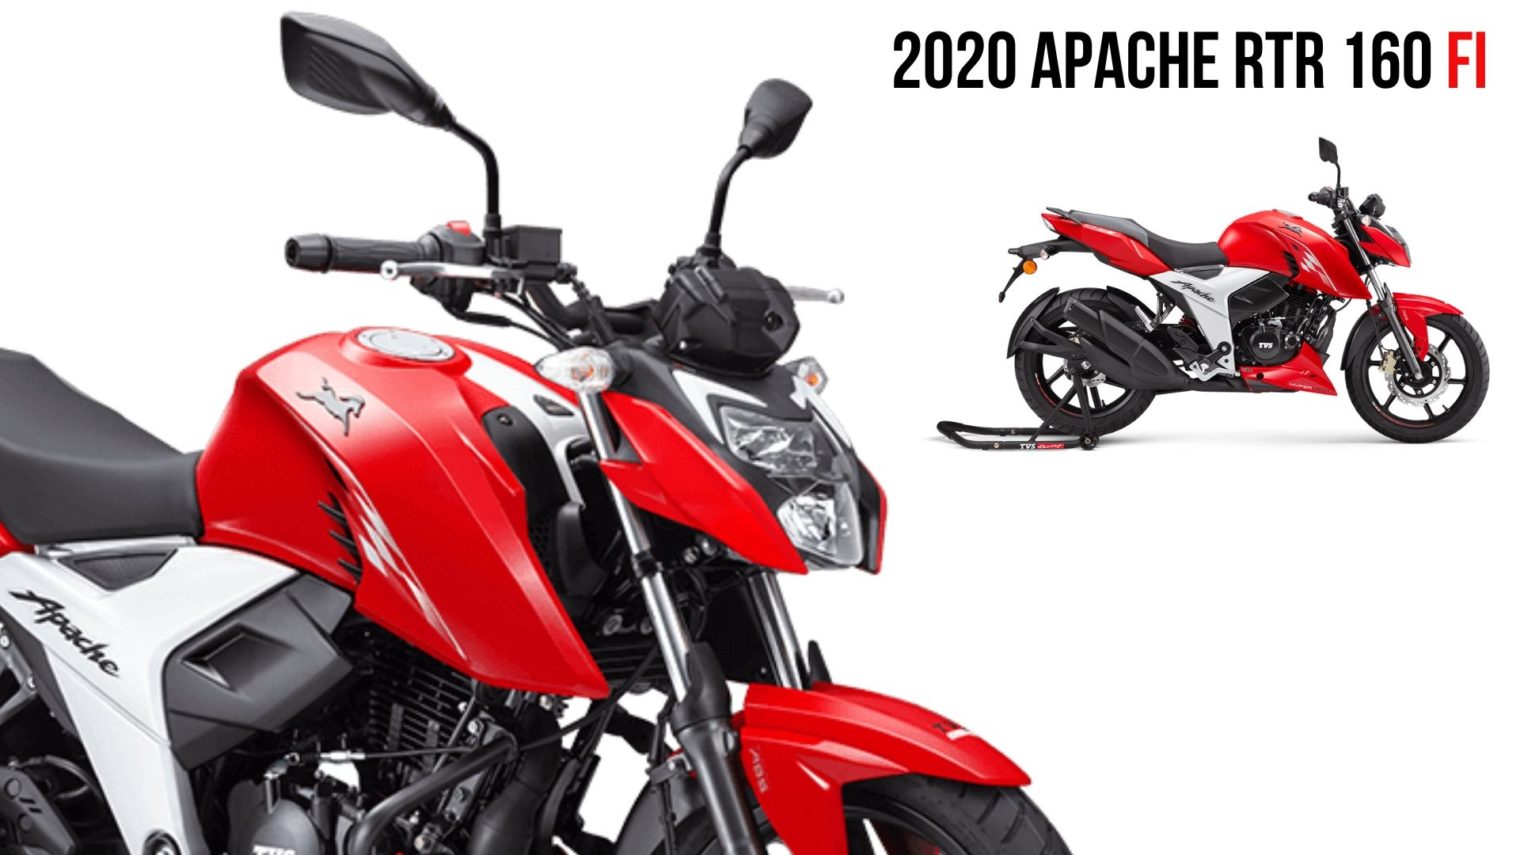 Apache Rtr 160 New Model Price In India